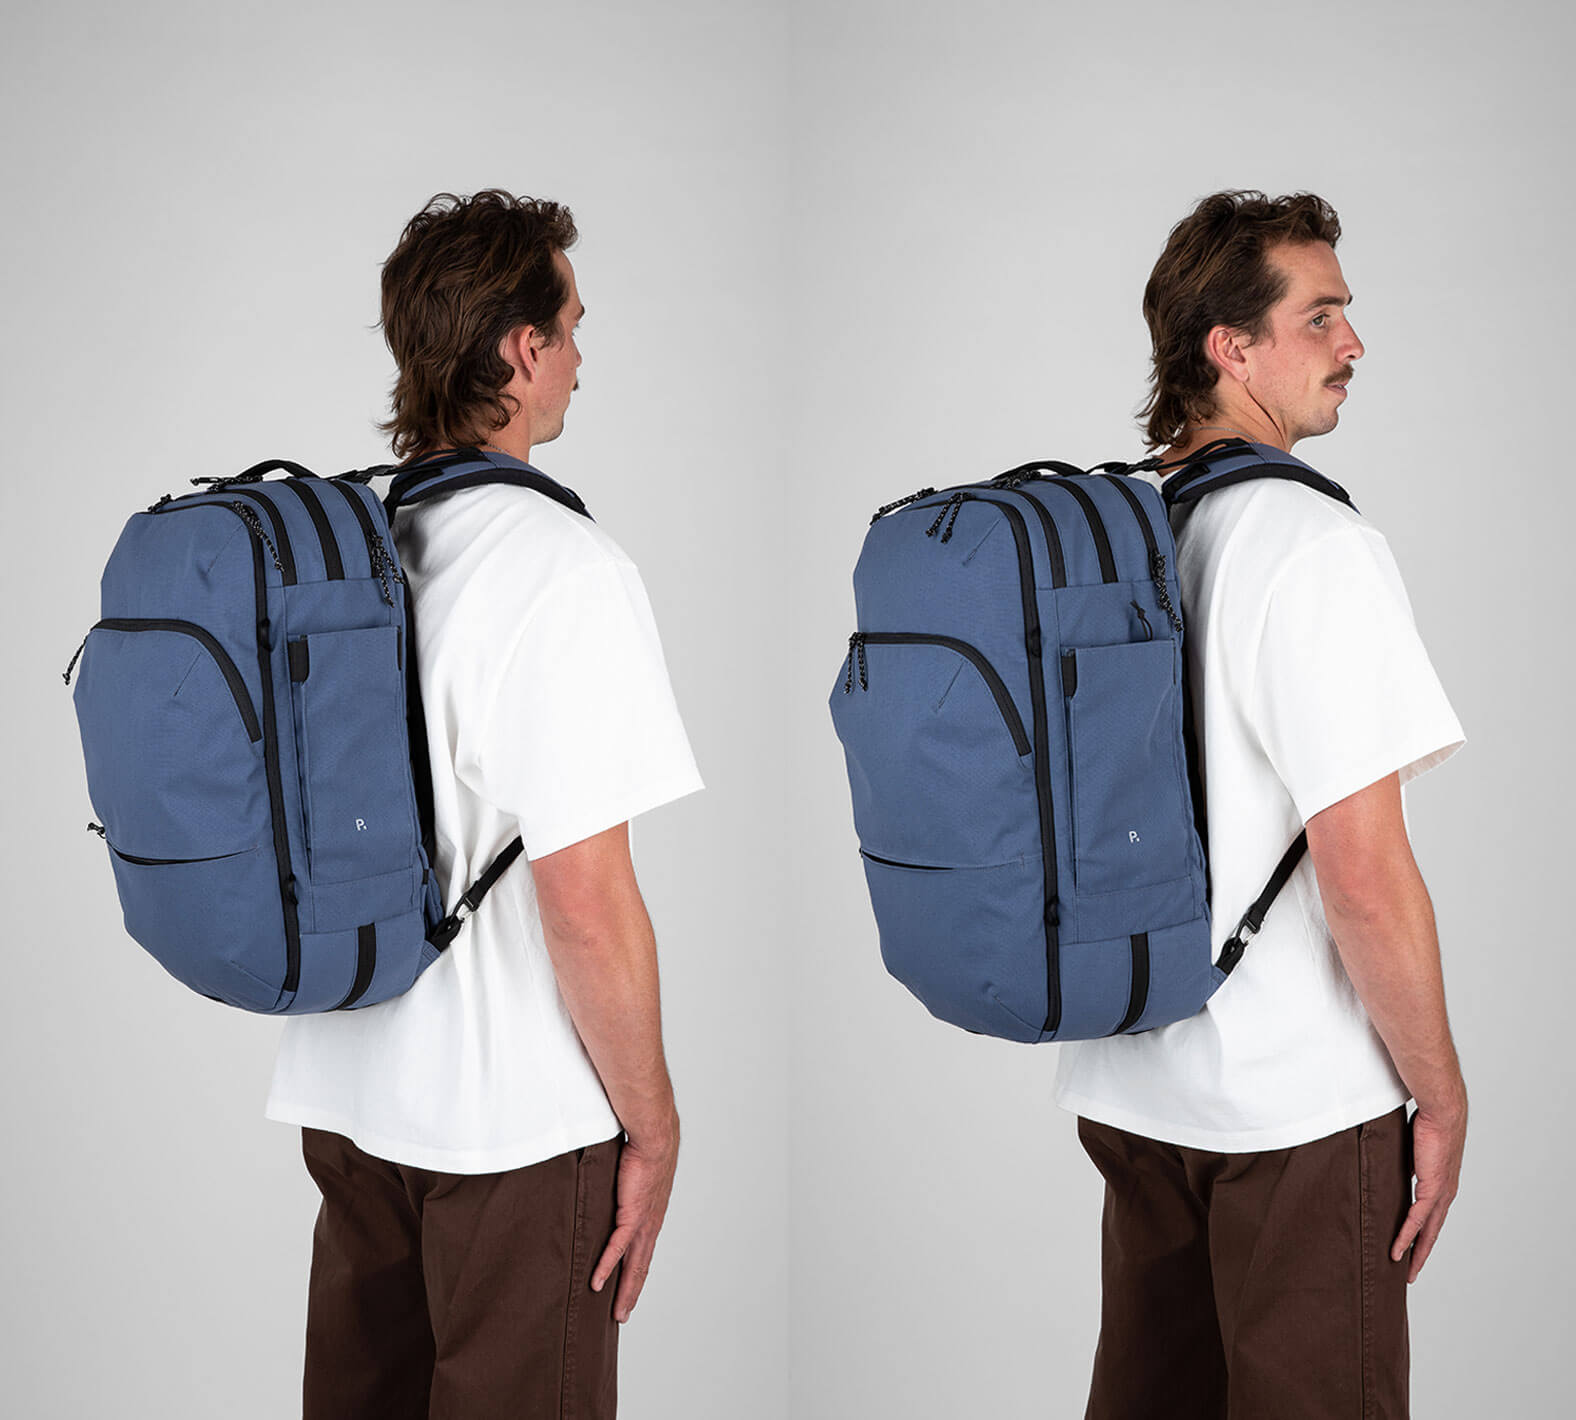 man wearing blue travel backpack